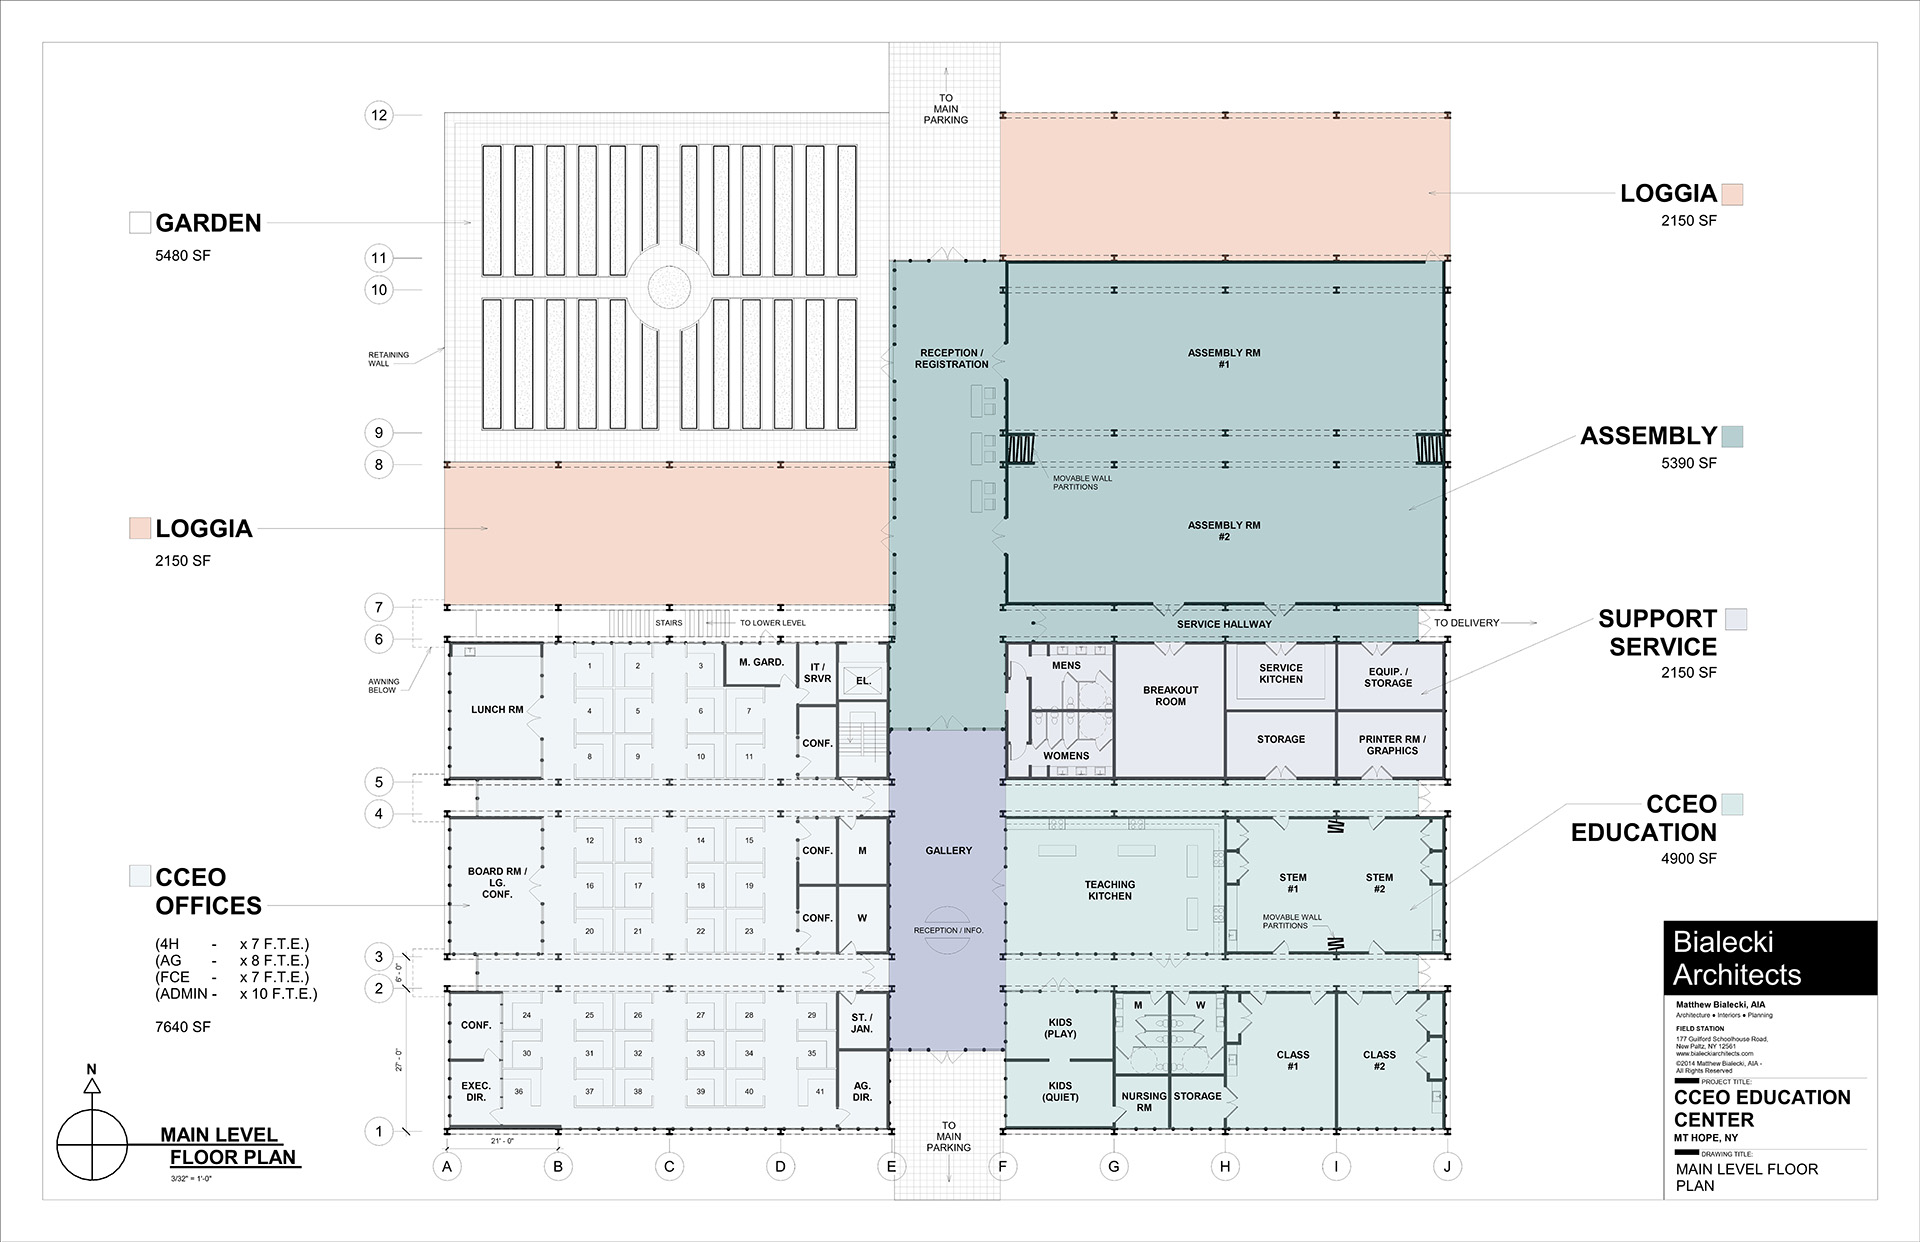 Education Center - Main Level Floor Plan